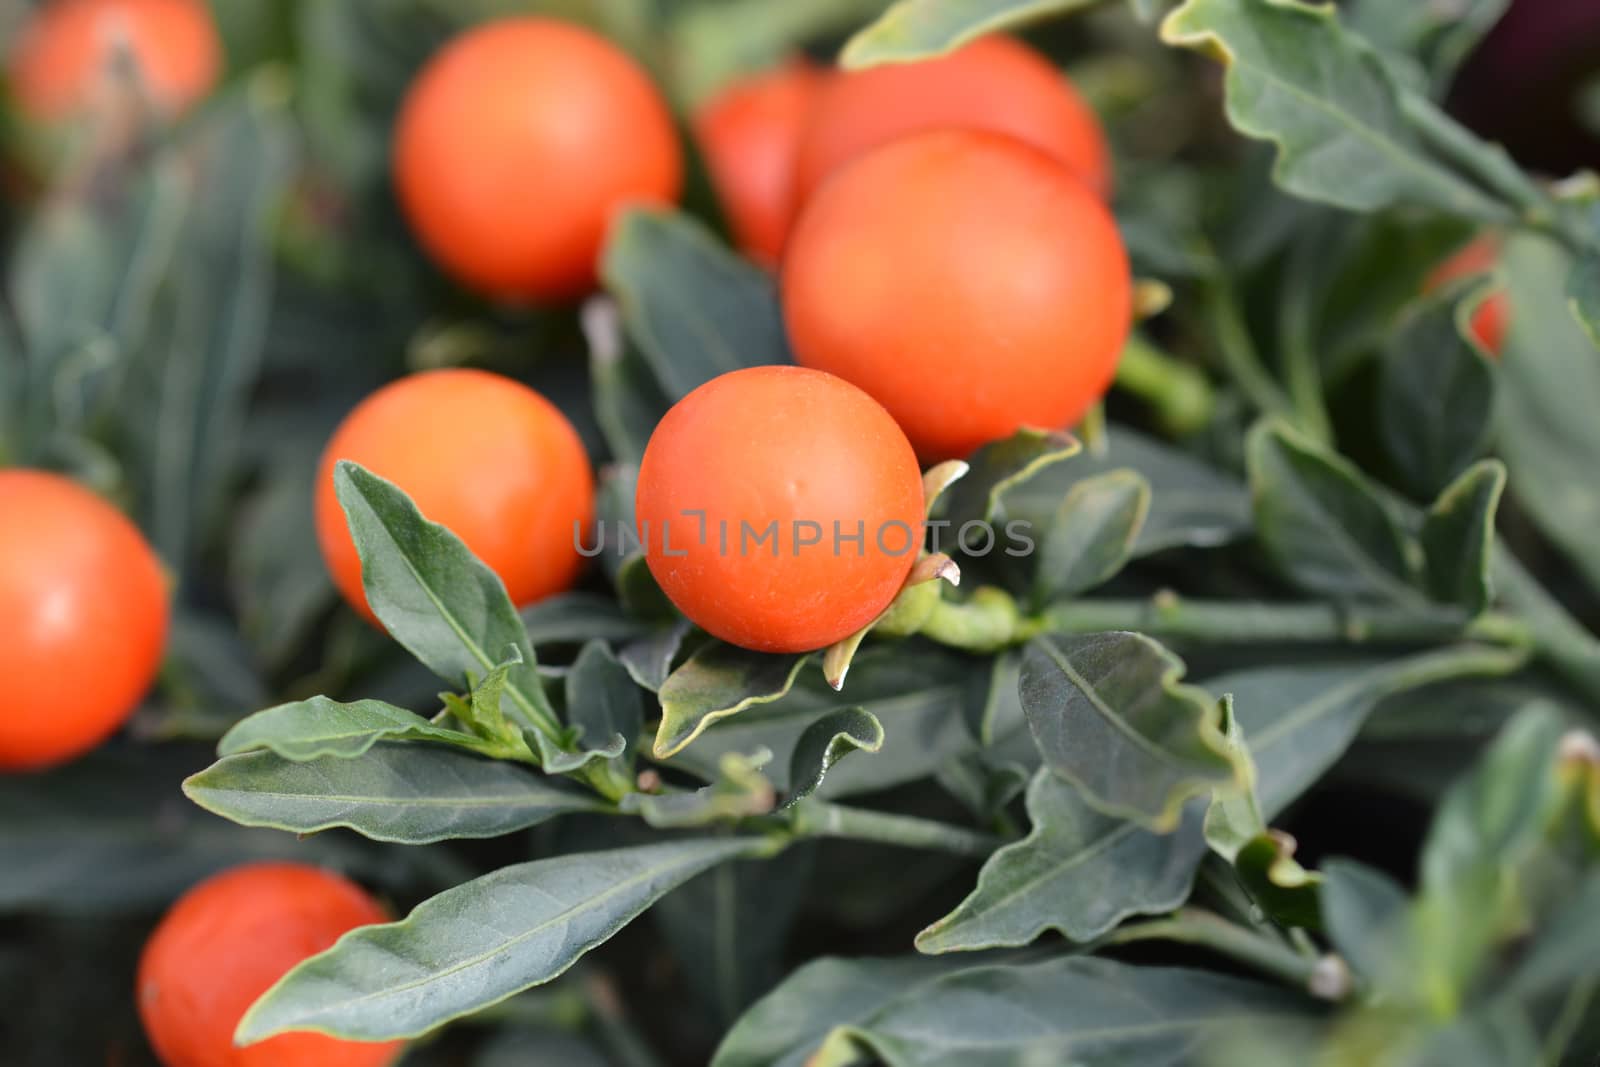 False Jerusalem cherry - Latin name - Solanum pseudocapsicum